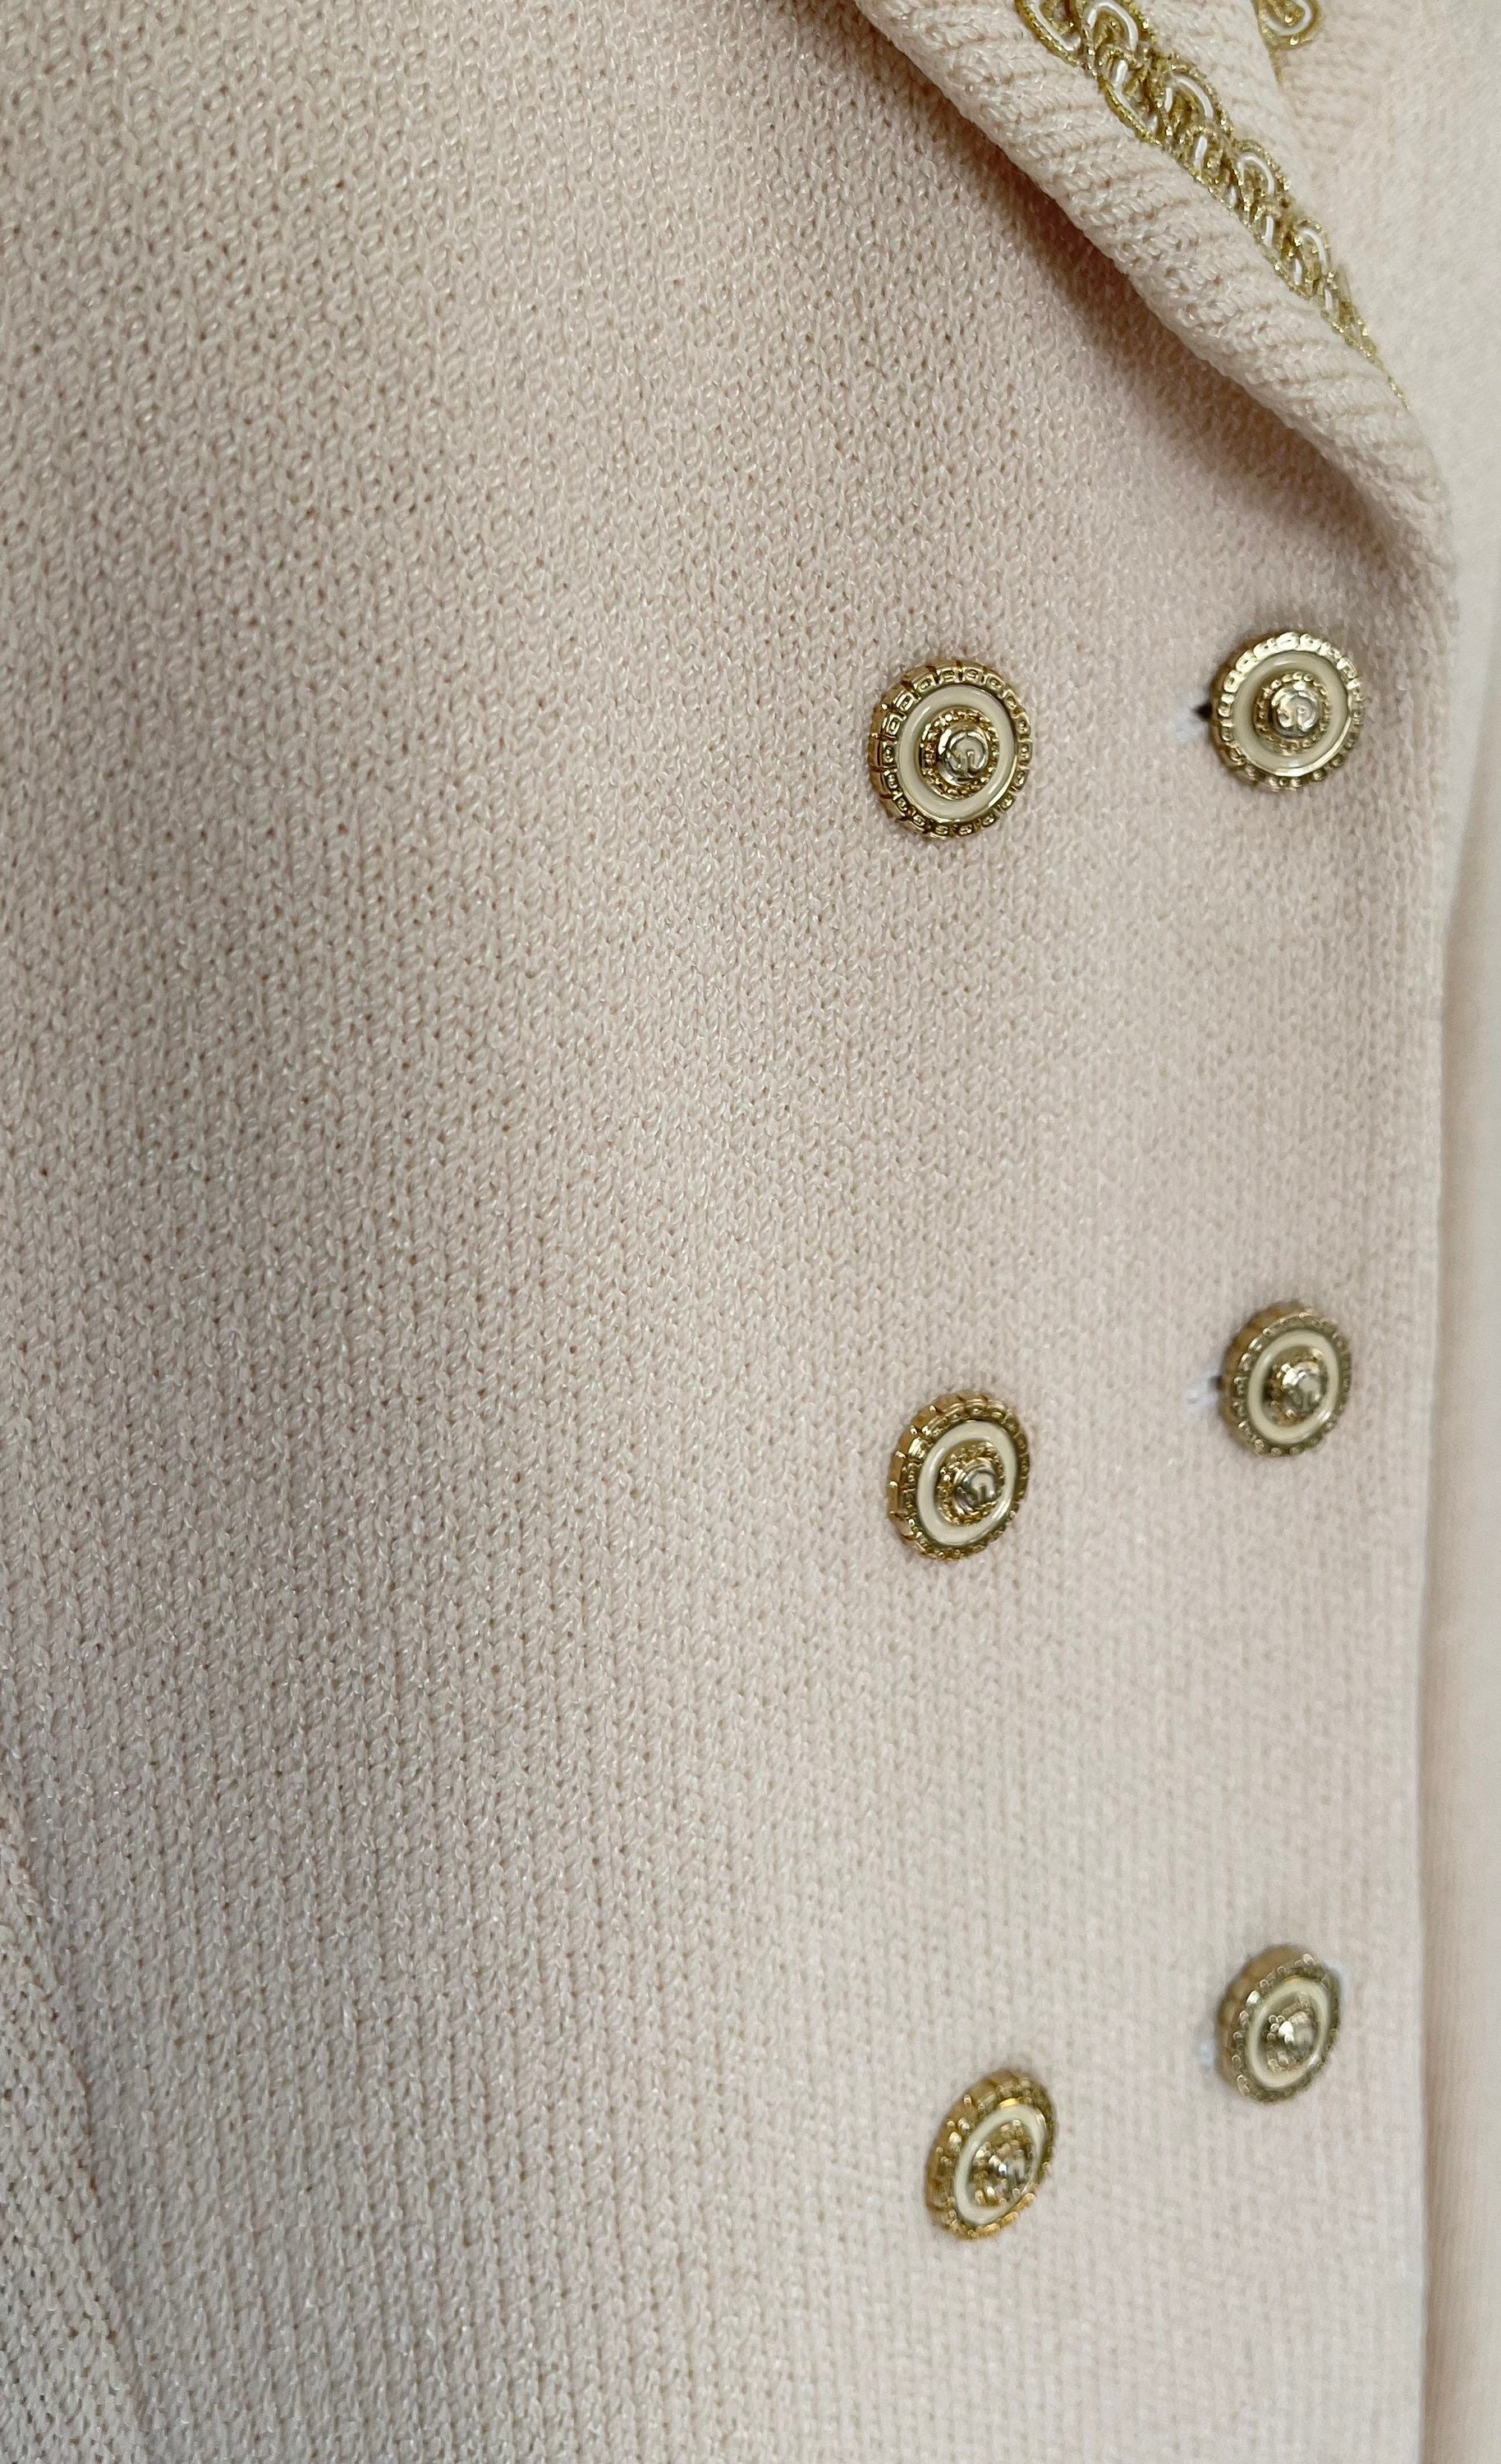 St. John Collection Jacket Gold Buttons Ivory White Knit Blazer Vintage ...